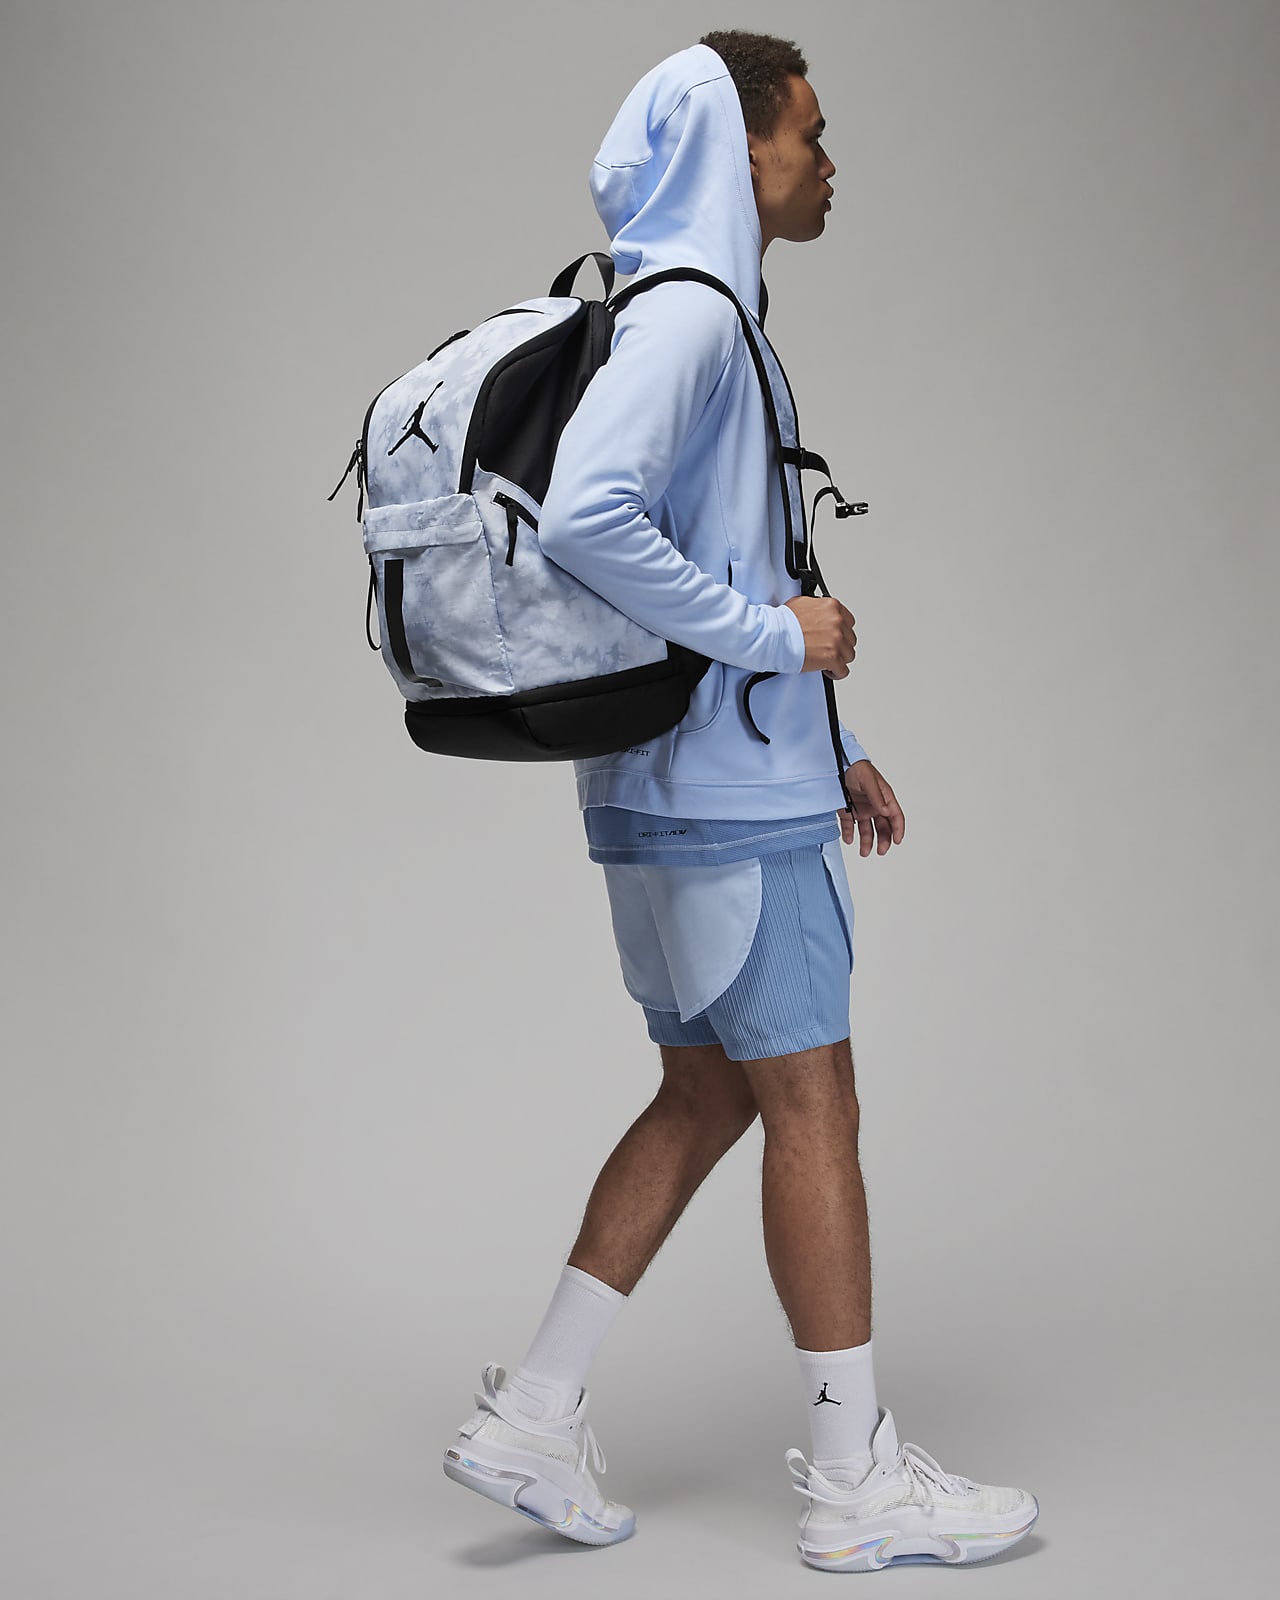 Shop Nike Jordan Velocity Backpack (Black) – Luggage Factory